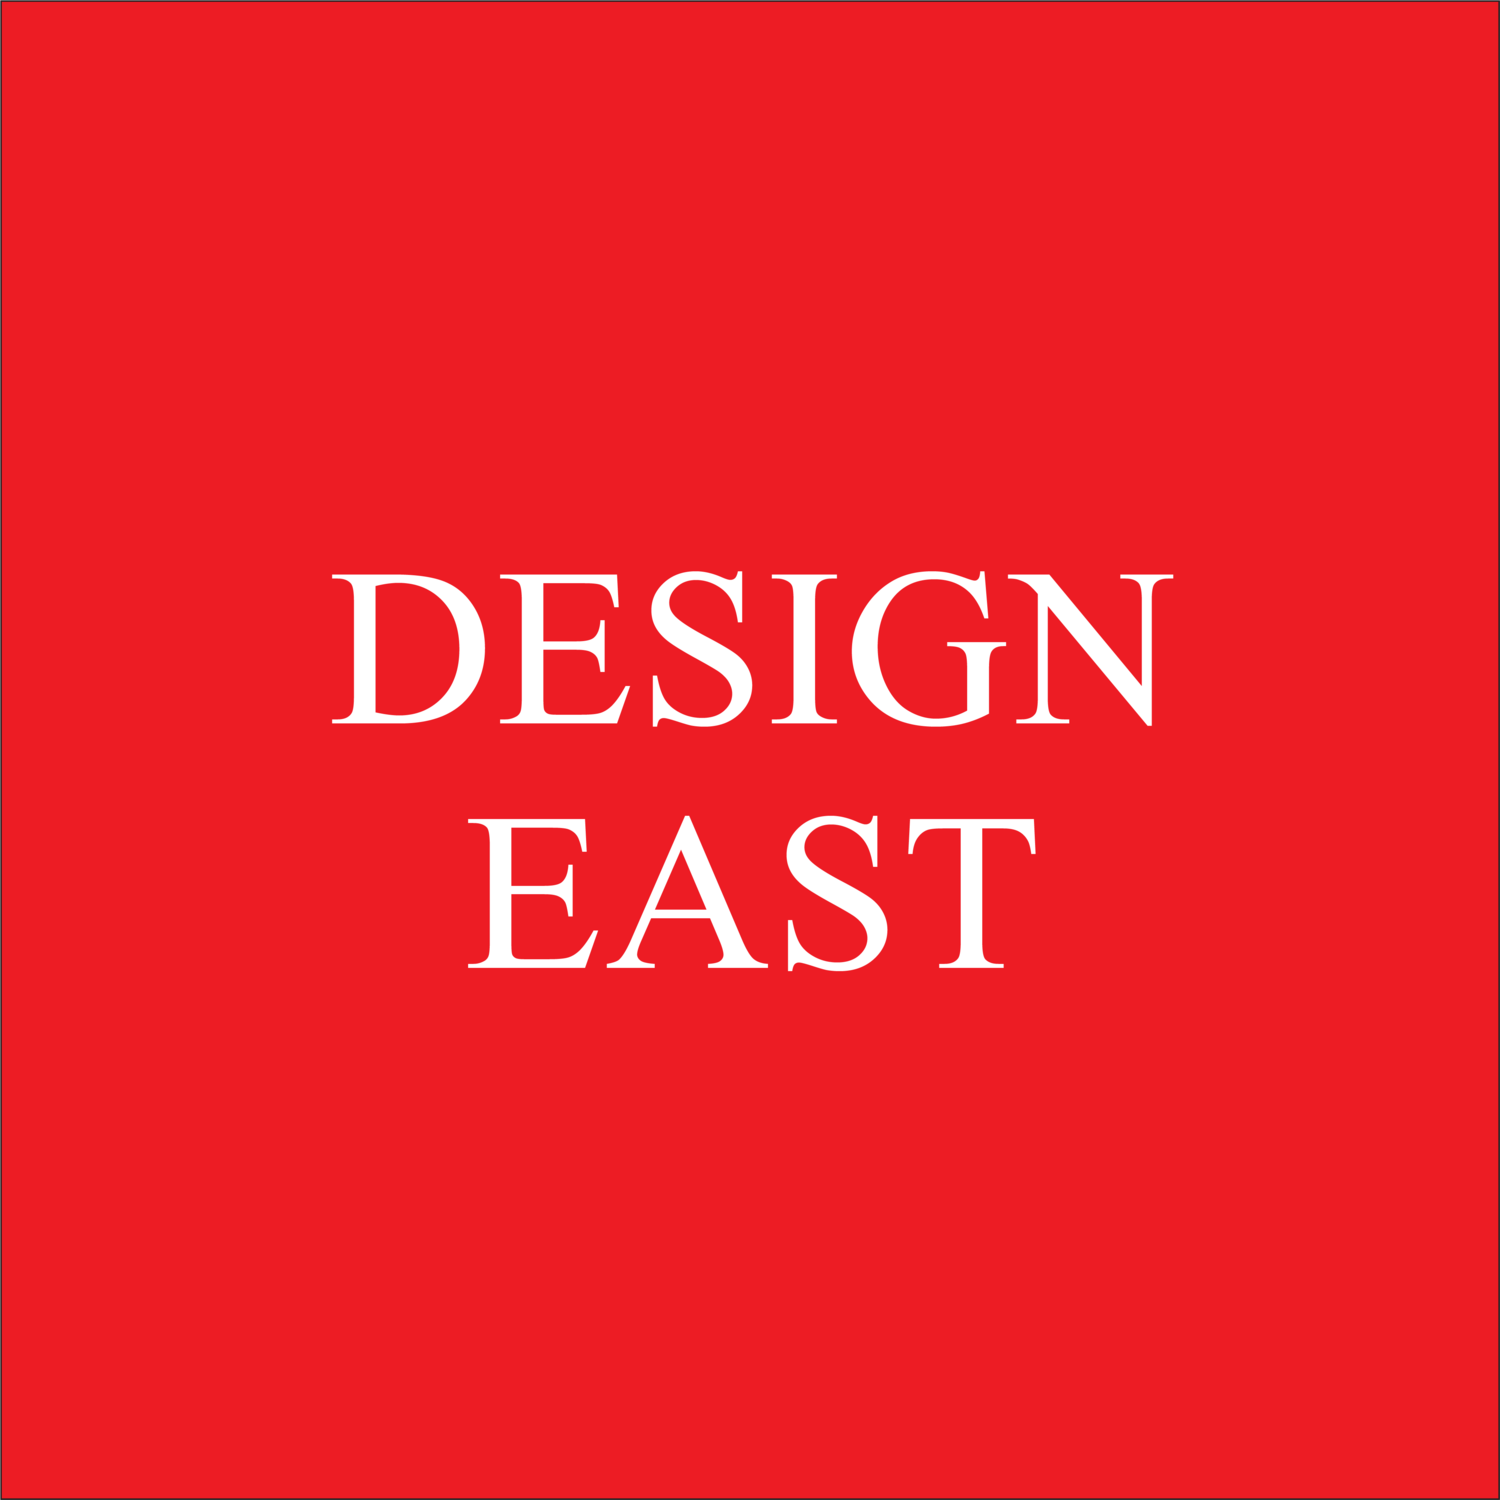 Design East